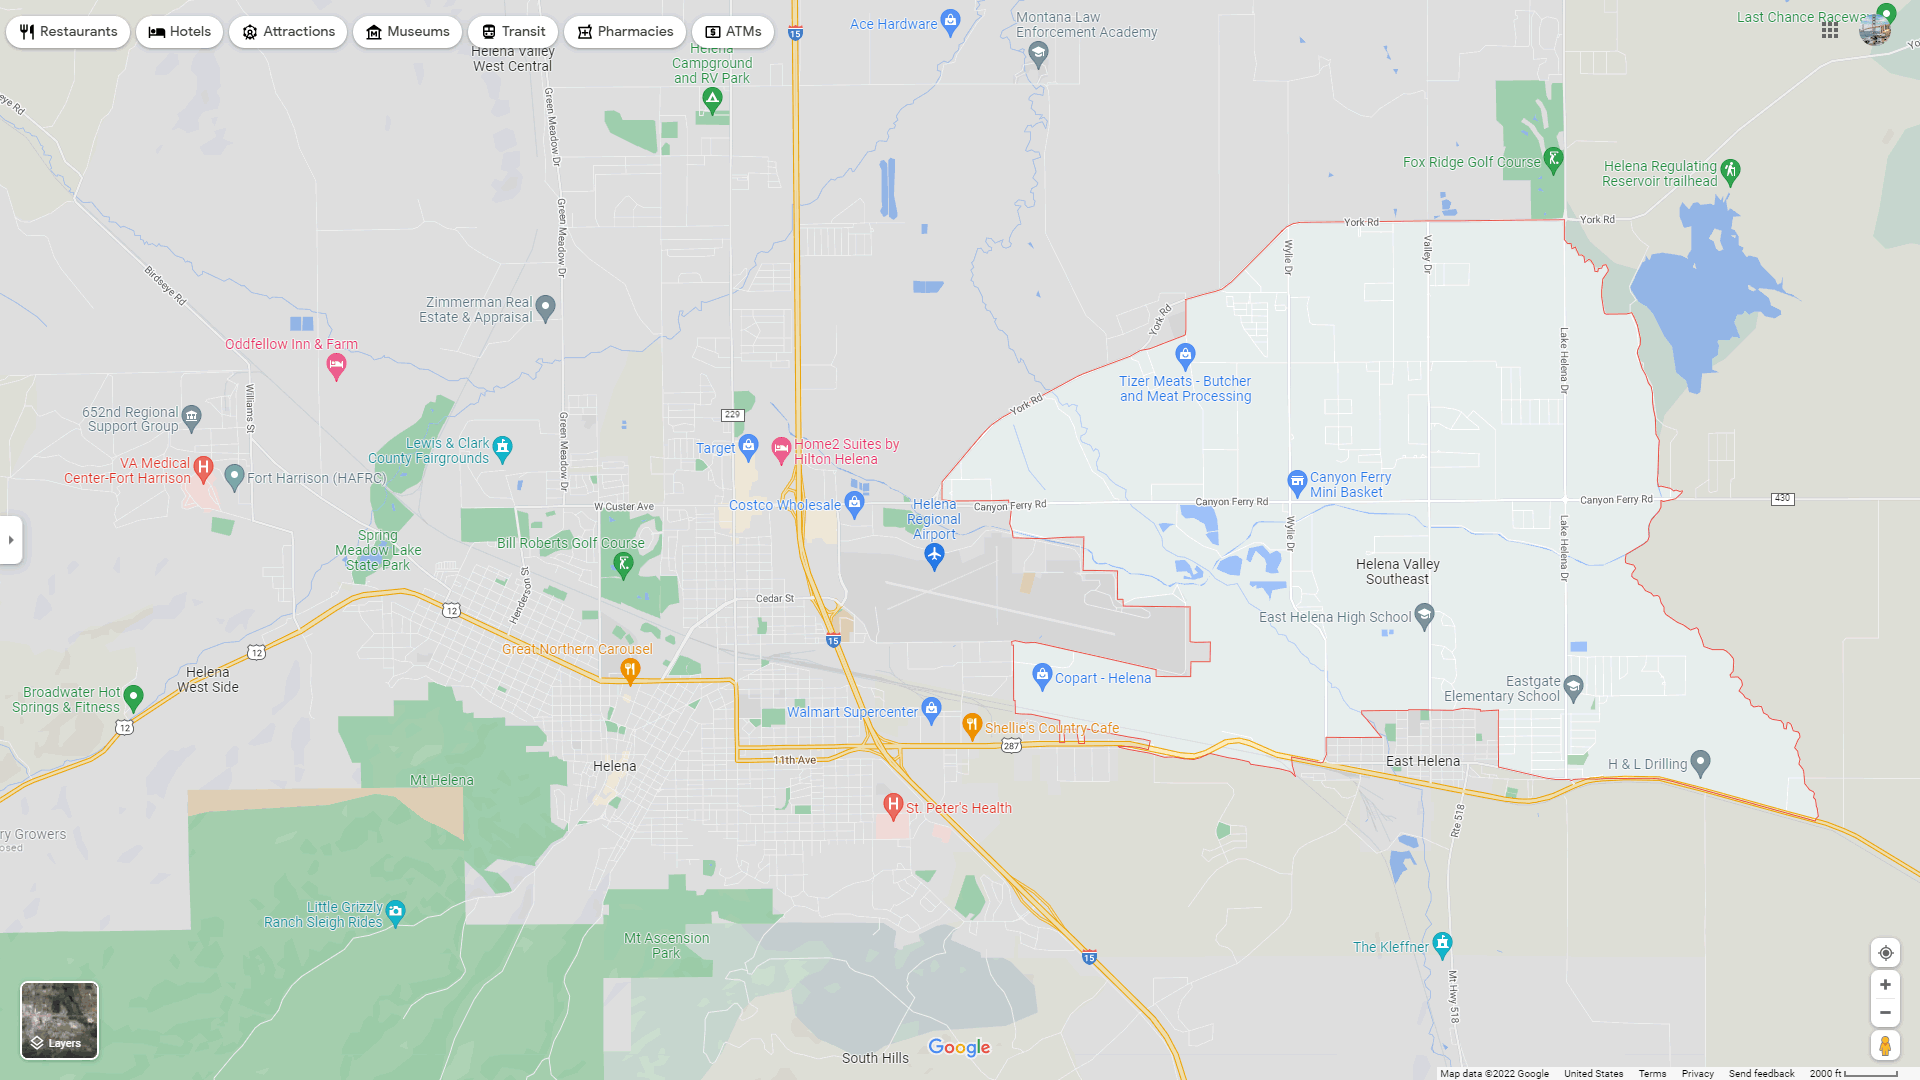 Helena Valley Southeast Montana Map